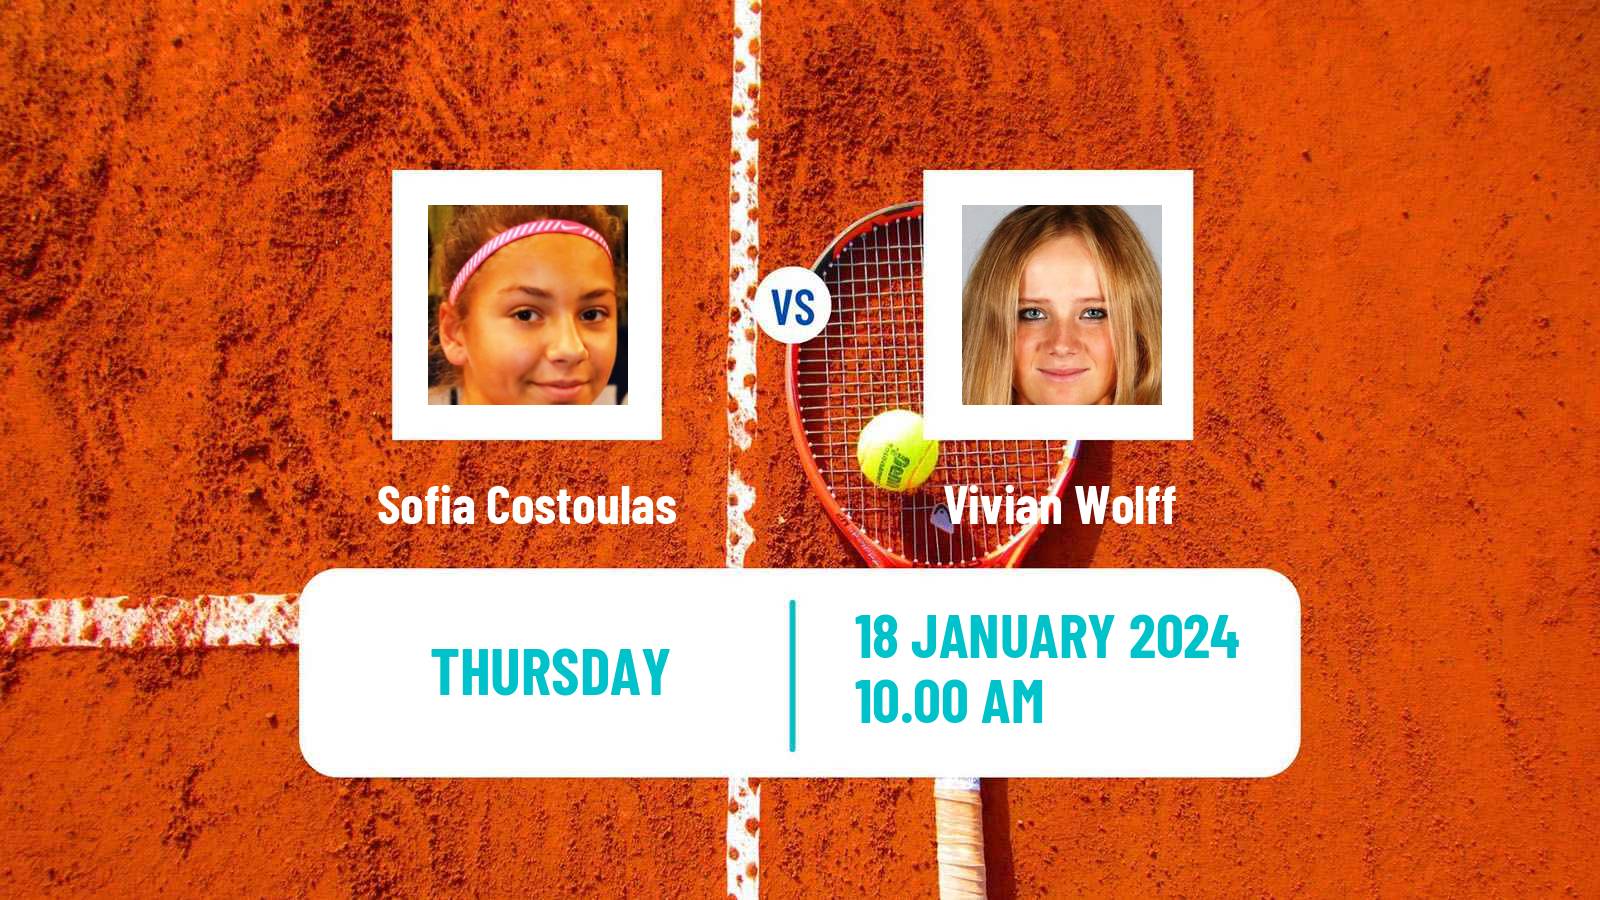 Tennis ITF W35 Naples Fl 2 Women Sofia Costoulas - Vivian Wolff